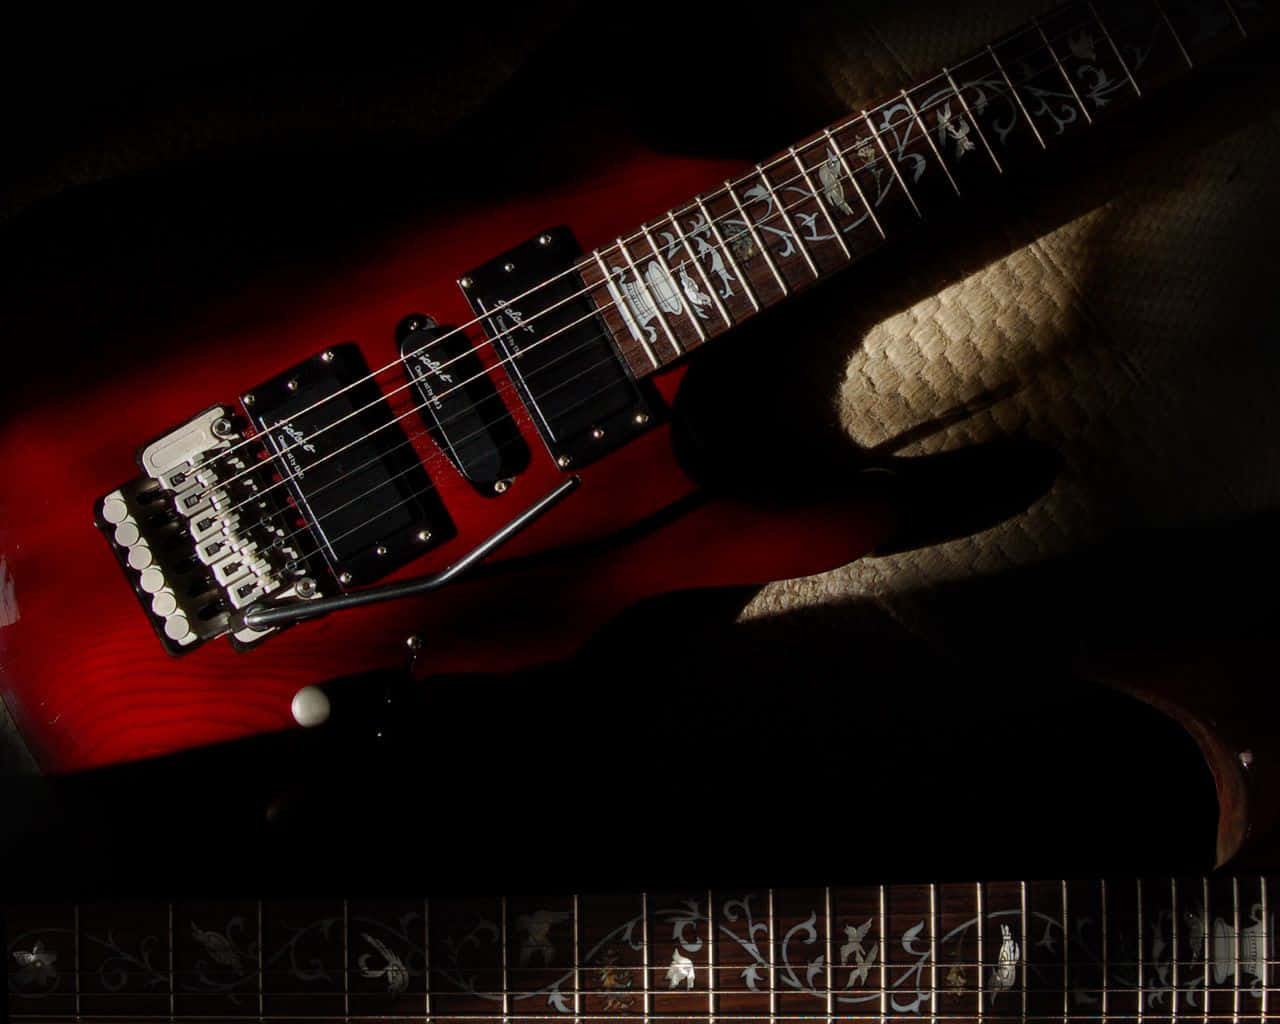 A vintage-style electric guitar against a black backdrop